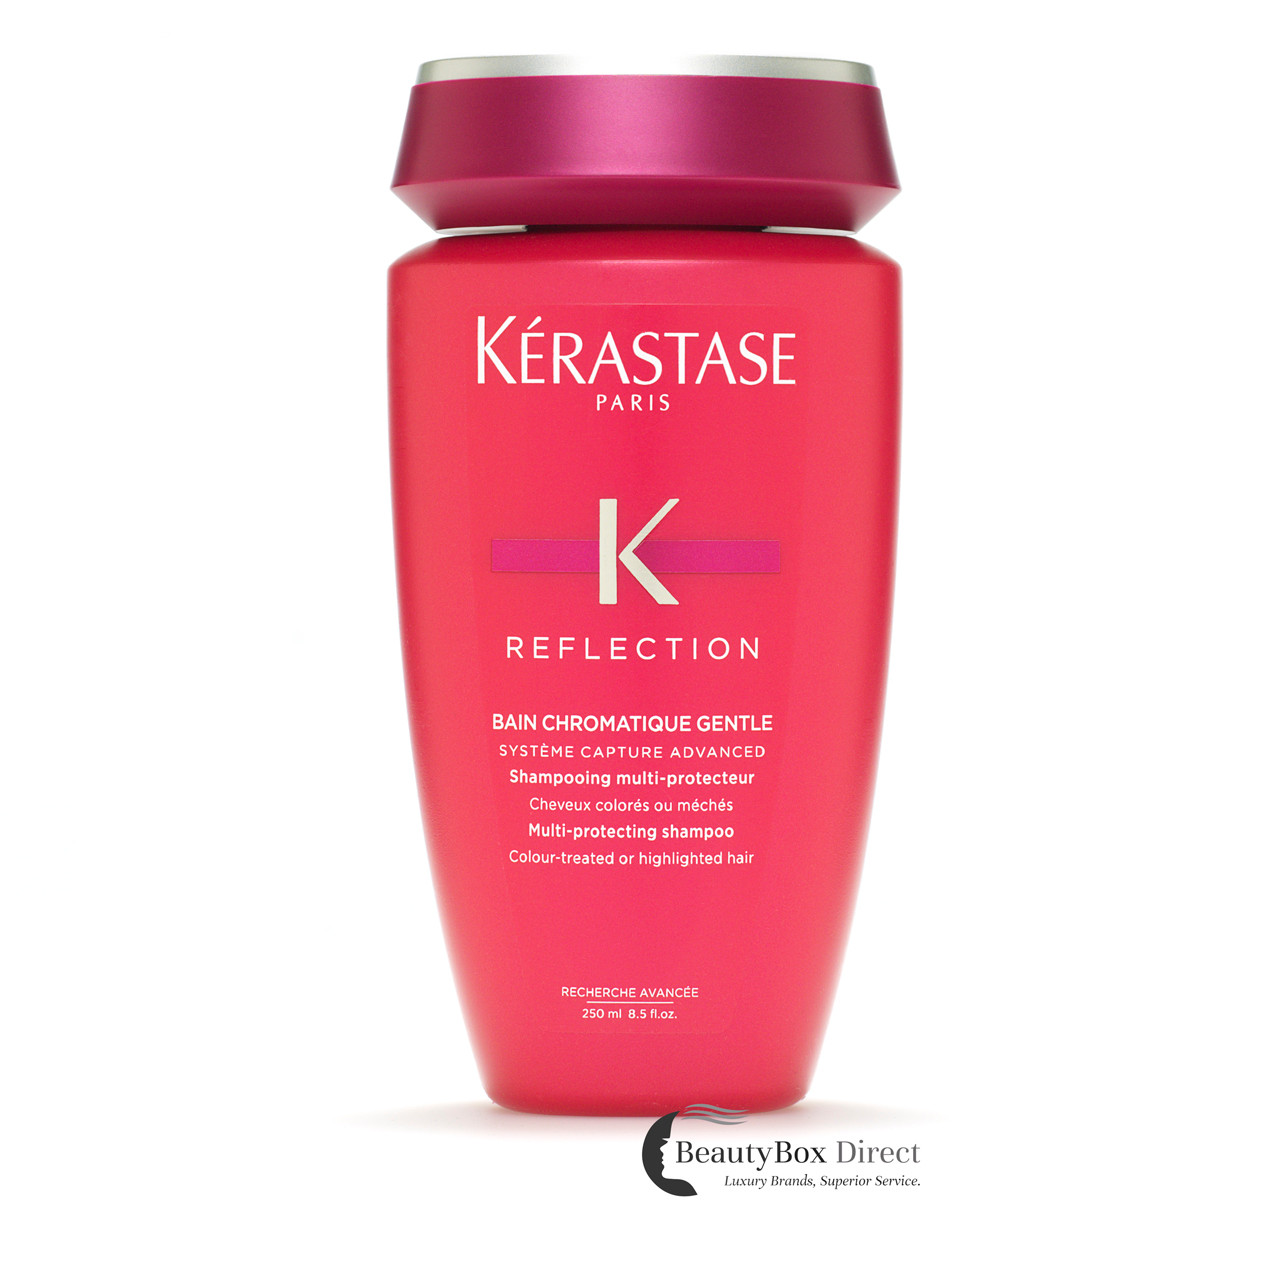 Kerastase Reflection Bain Chromatique Gentle Shampoo 8.5 fl oz No Sulfate.  - BeautyBox Direct